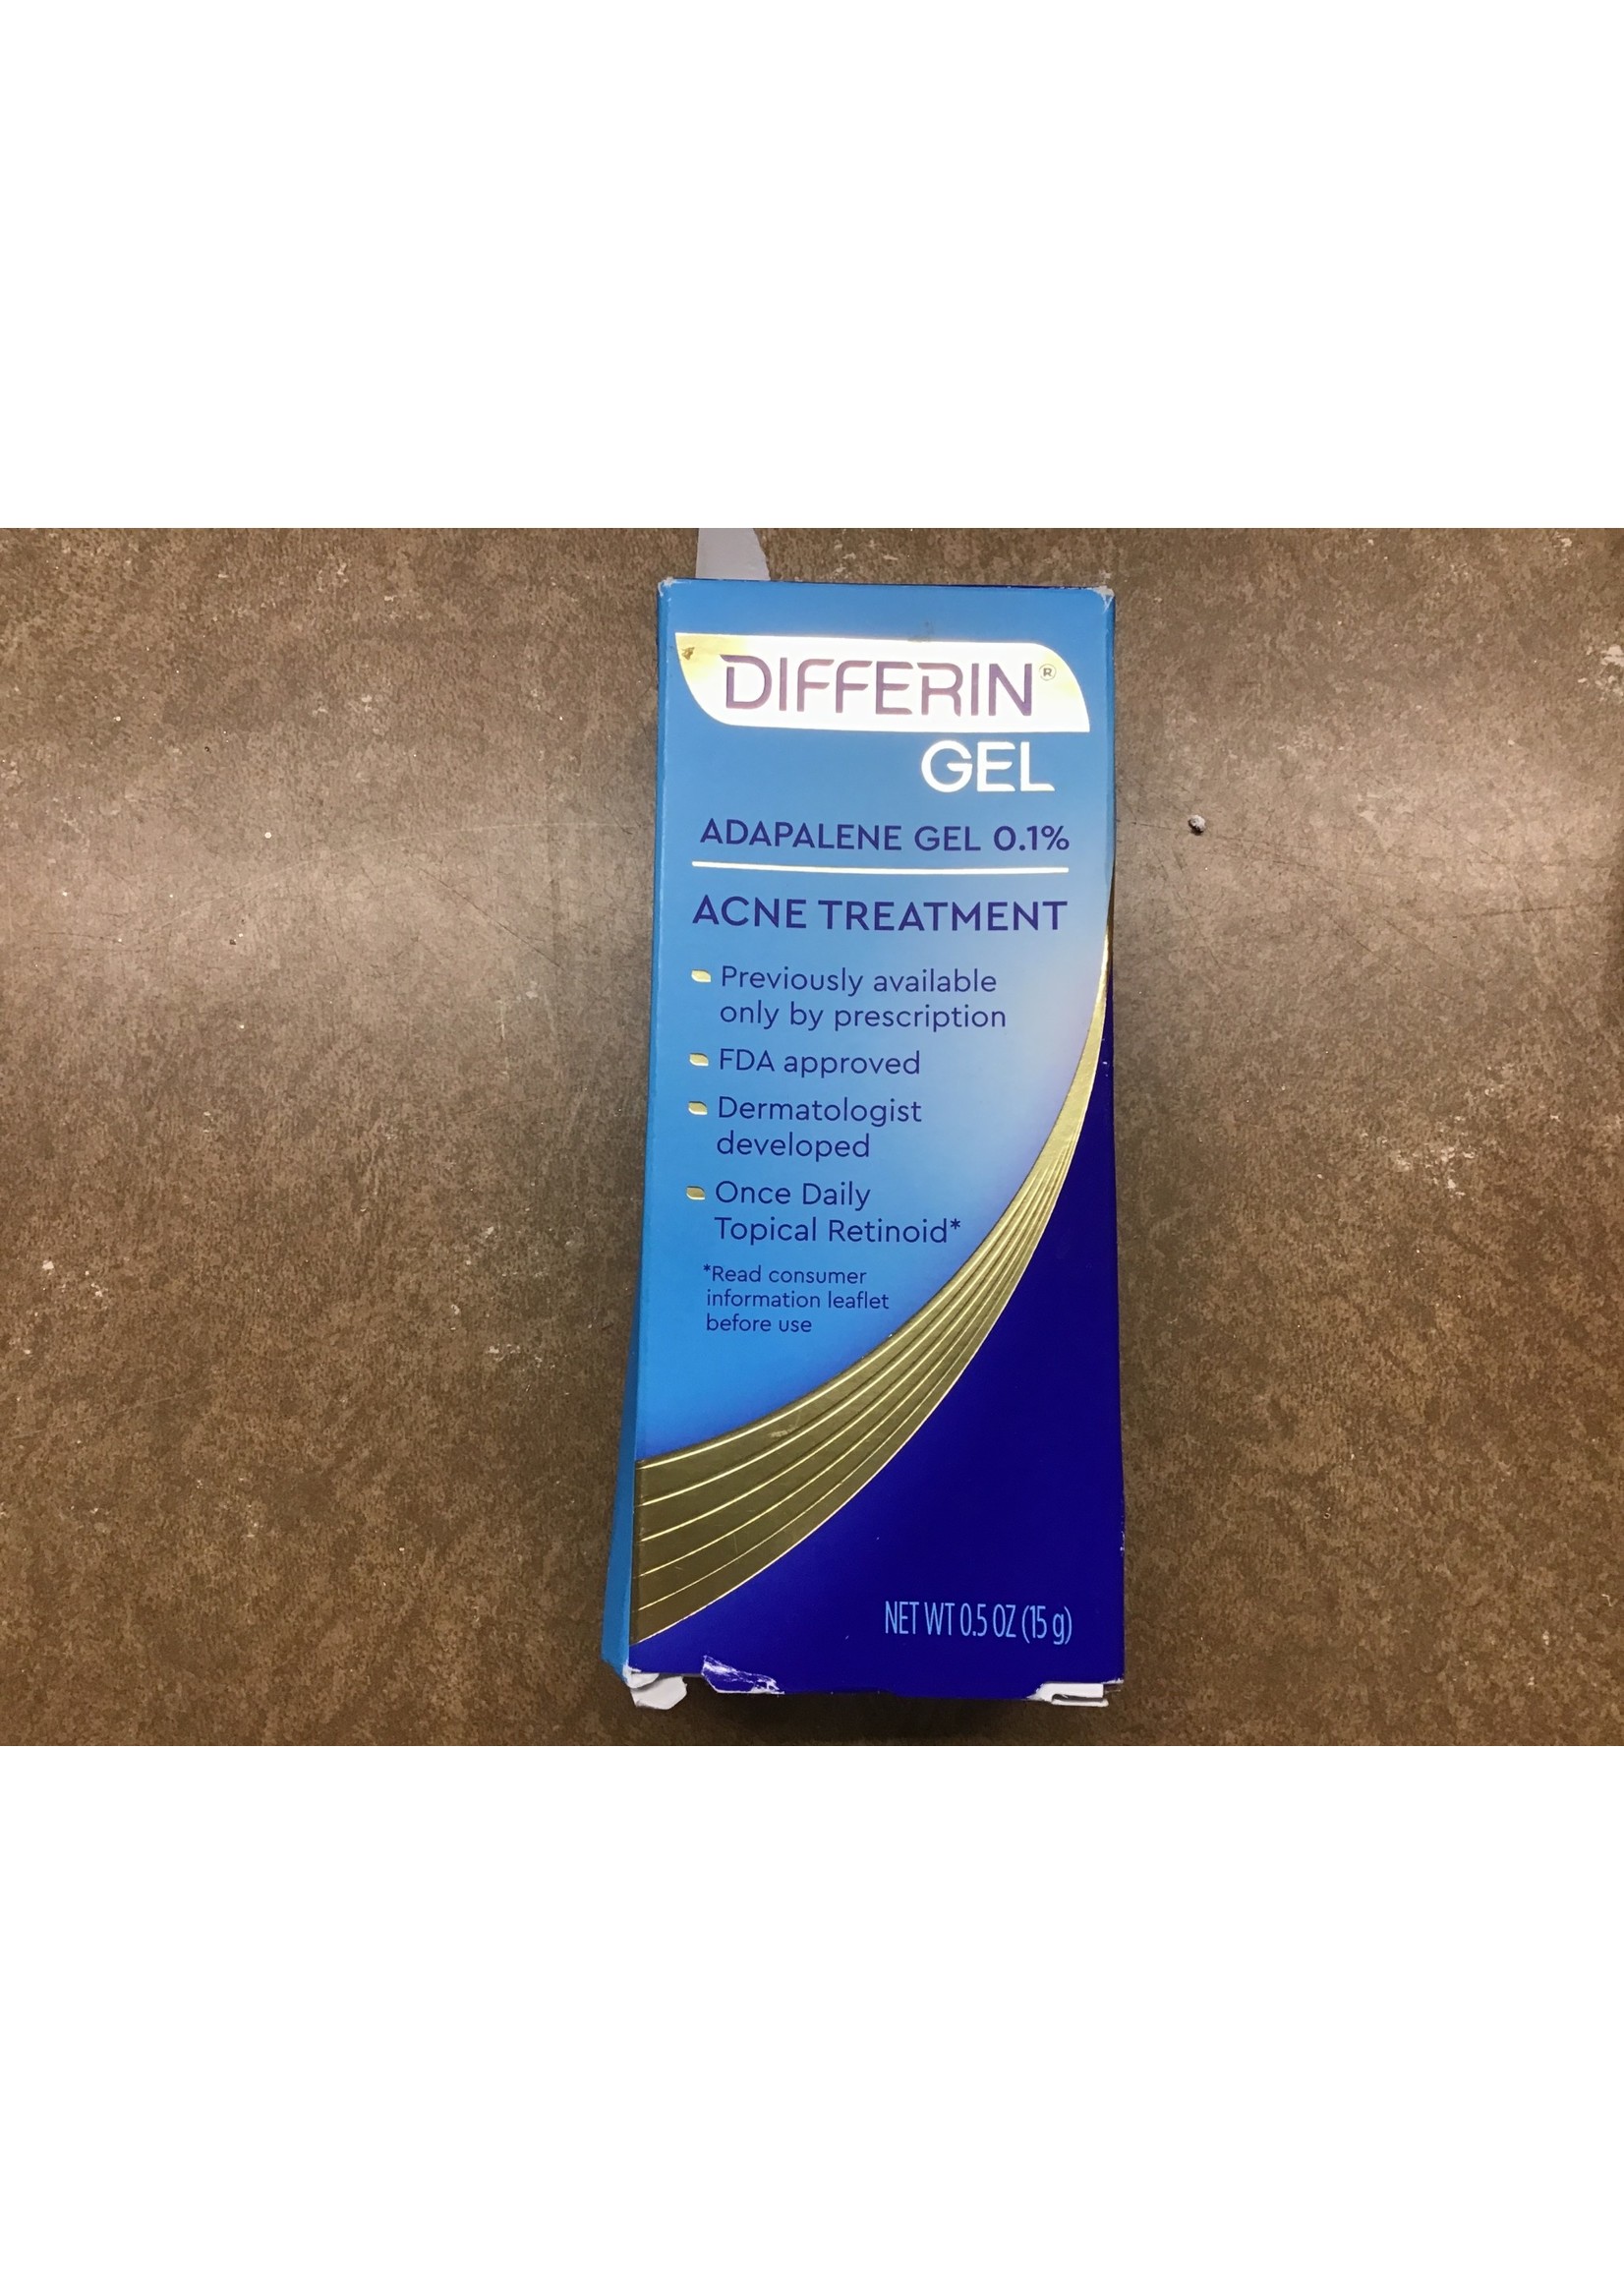 Differin Adapalene Gel 0.1% Acne Treatment - 15 g  *box damage*